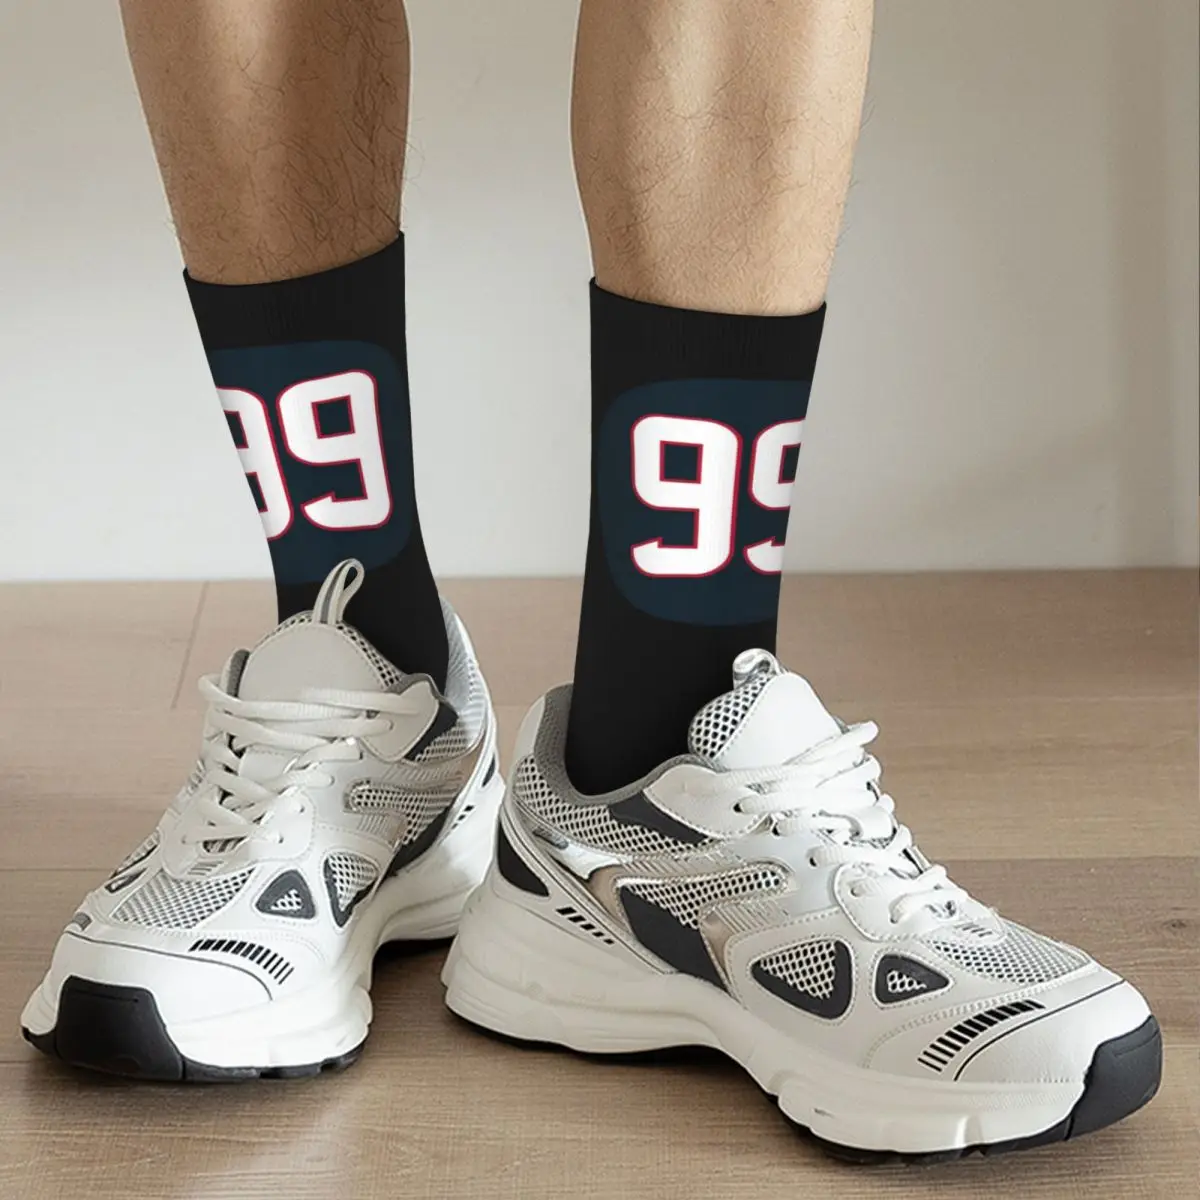 Watt Number 99 Jersey Houston Texans Adult Socks Unisex socks,men Socks women Socks men s stitch houston american football jersey watson watt fuller v roby foster hopkins howard customized fans jerseys